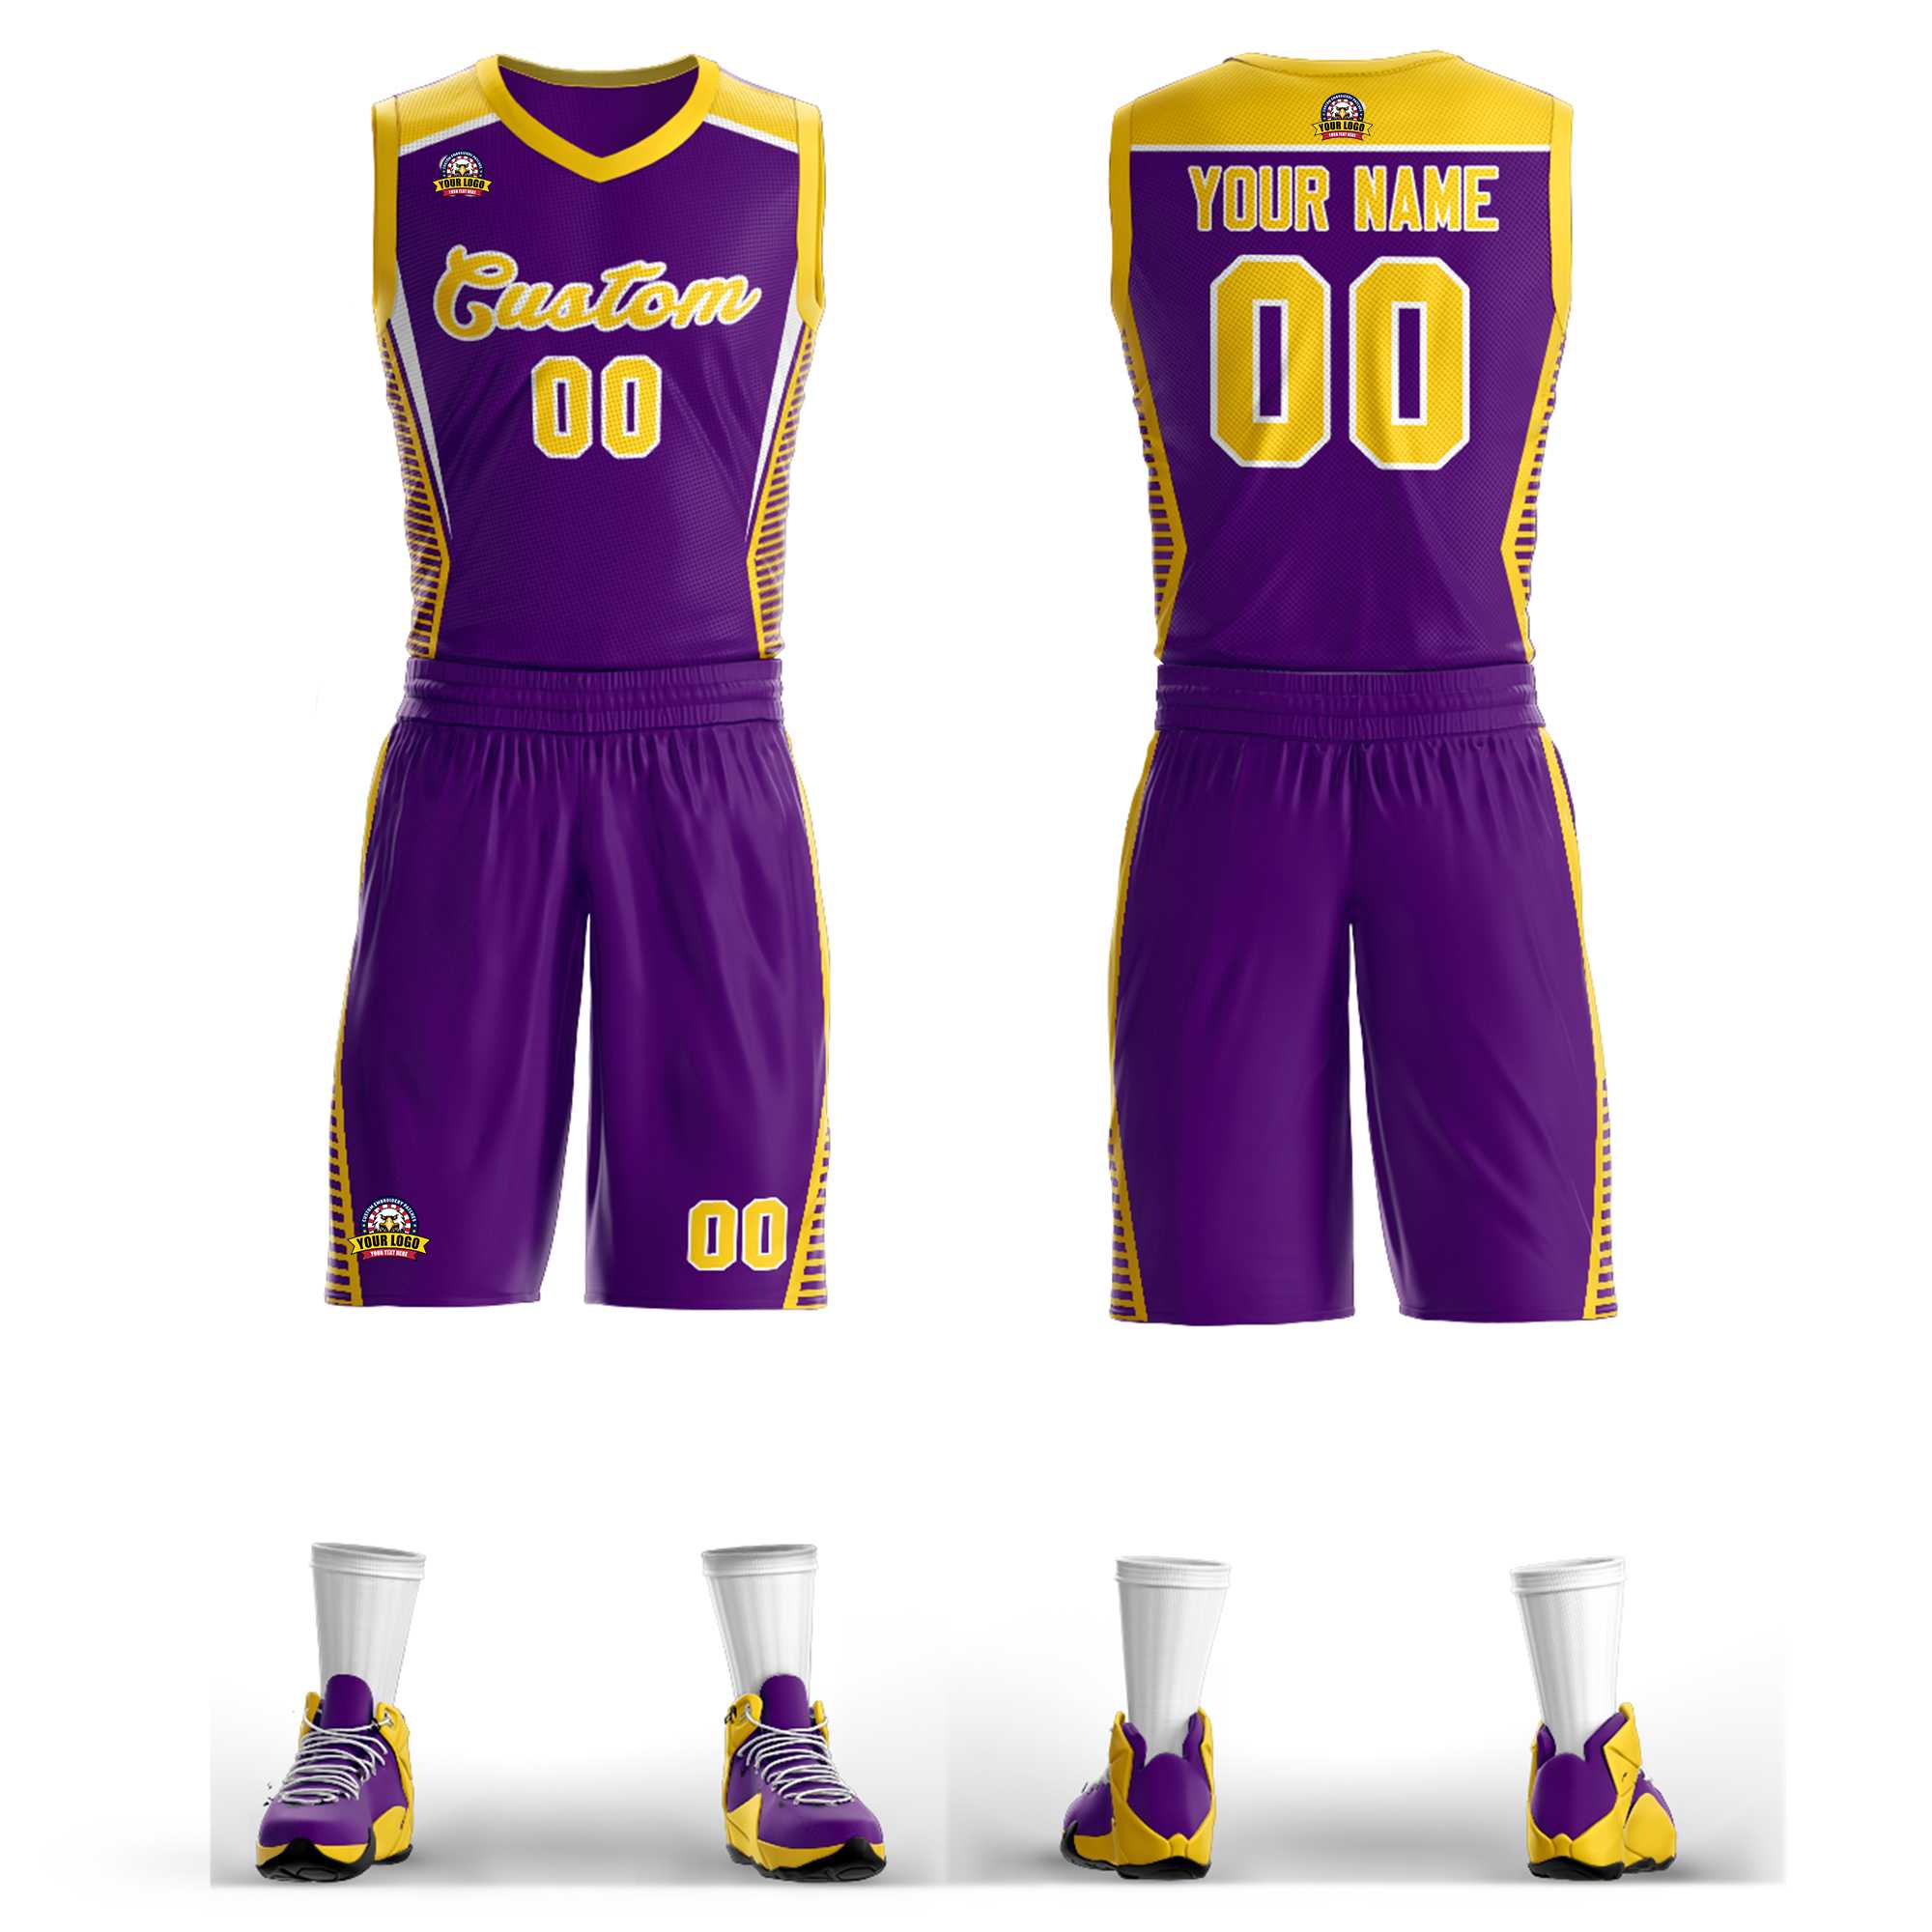 FANSIDEA Custom Gold Purple Authentic City Edition Basketball Jersey Men's Size:3XL